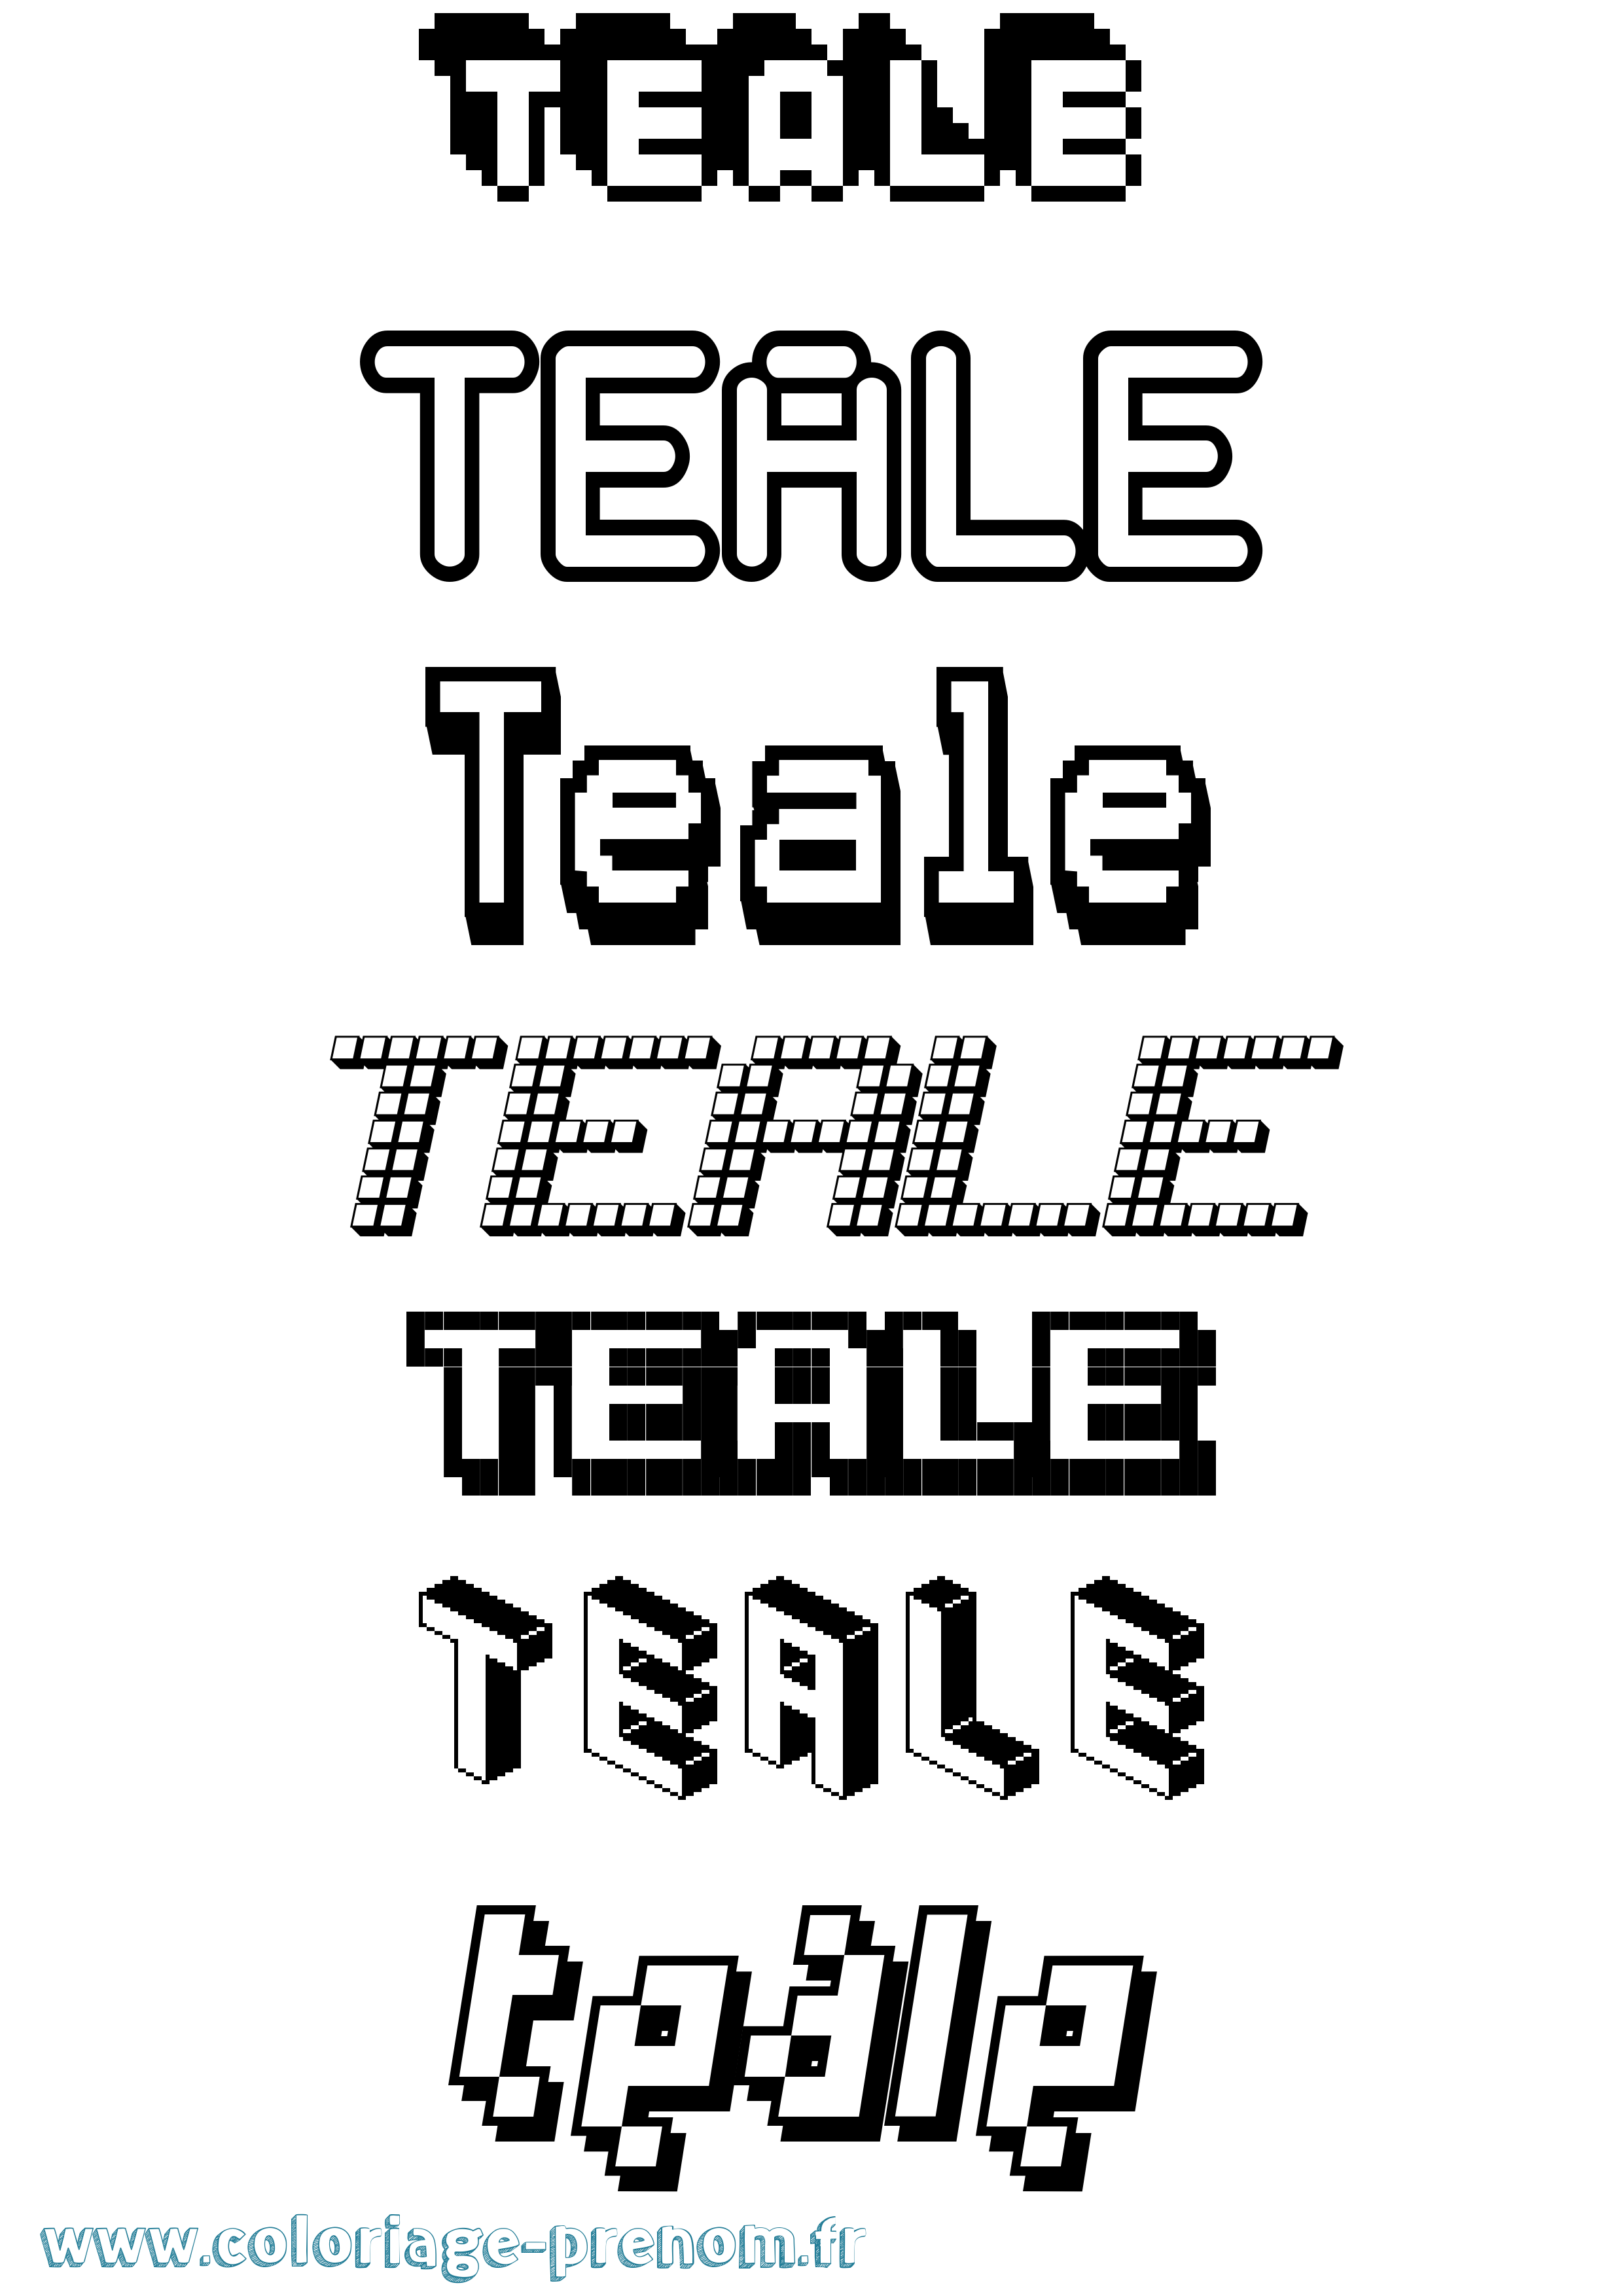 Coloriage prénom Teale Pixel